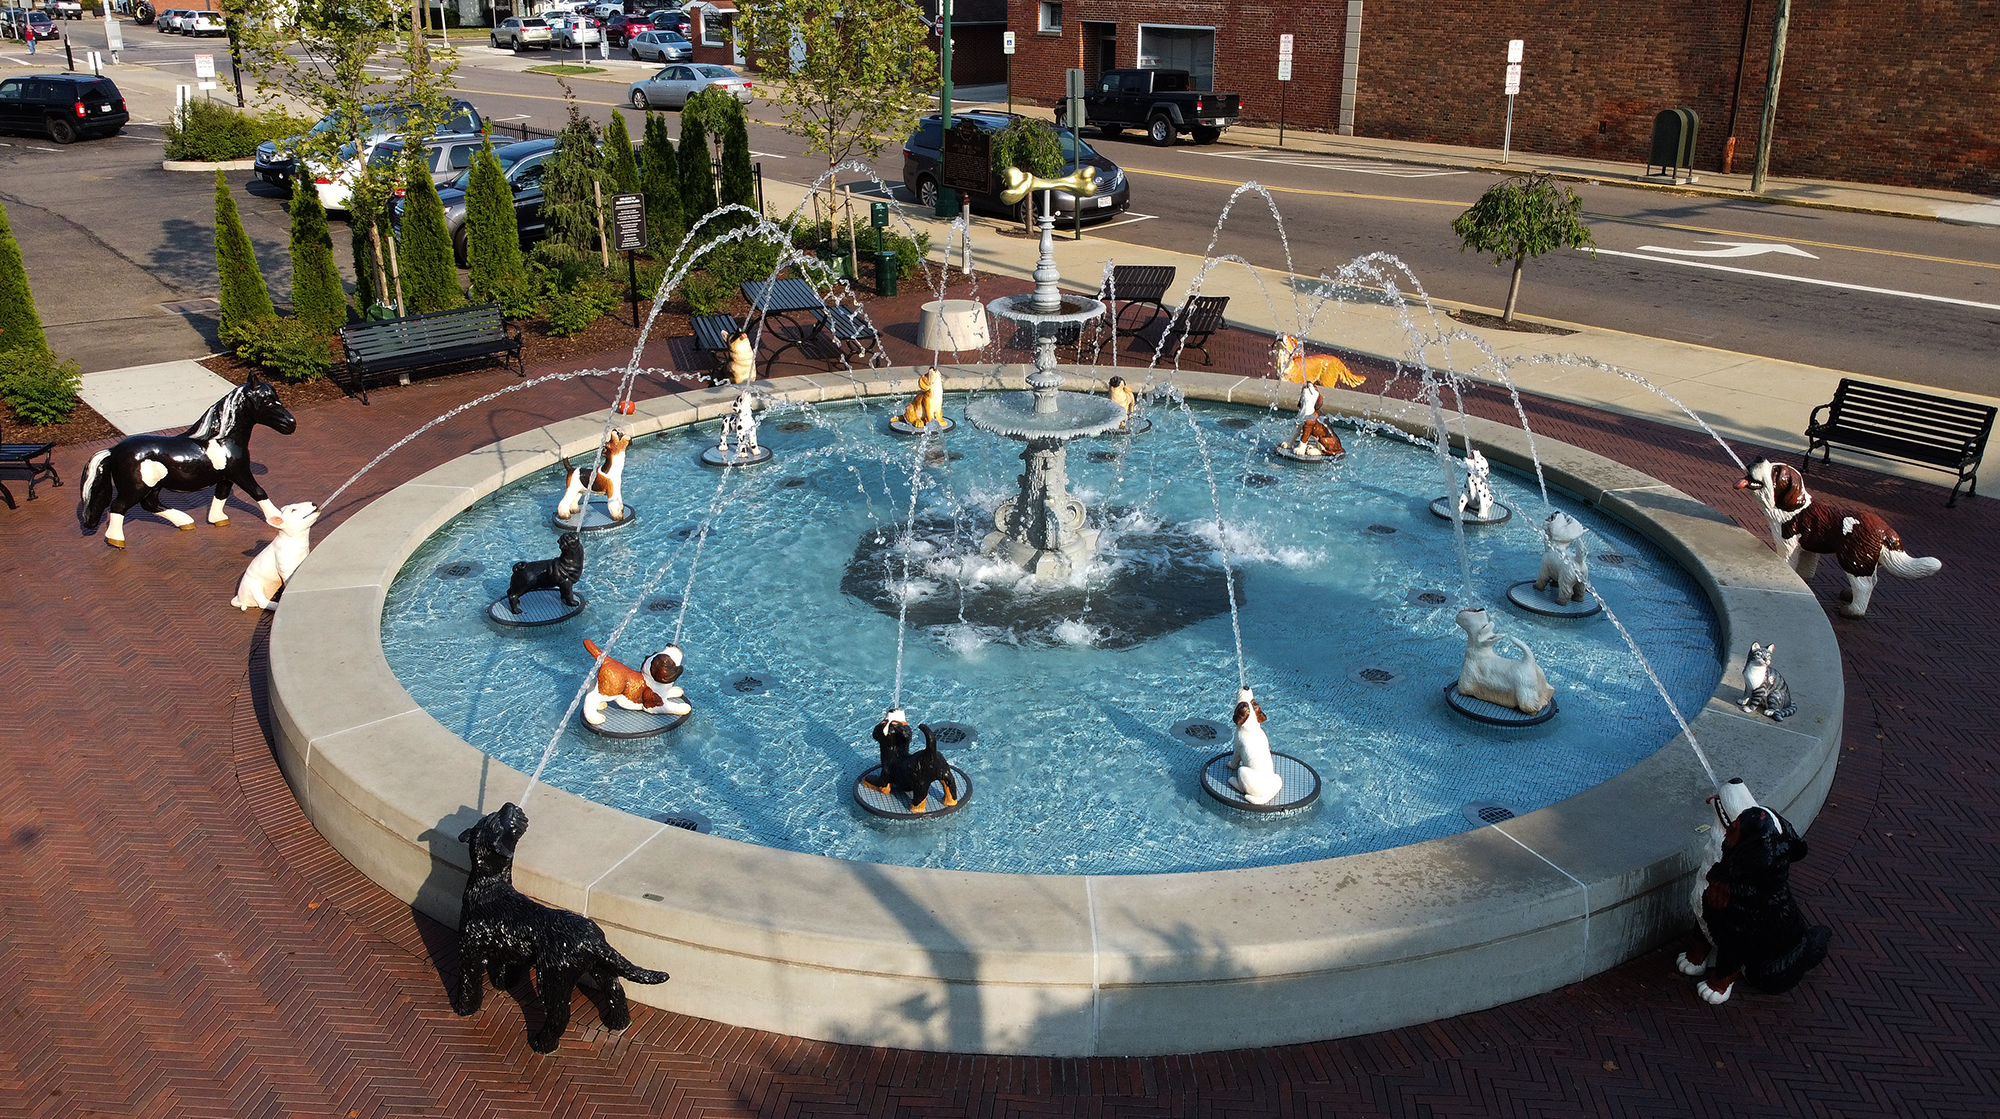 South Main Plaza Fountain